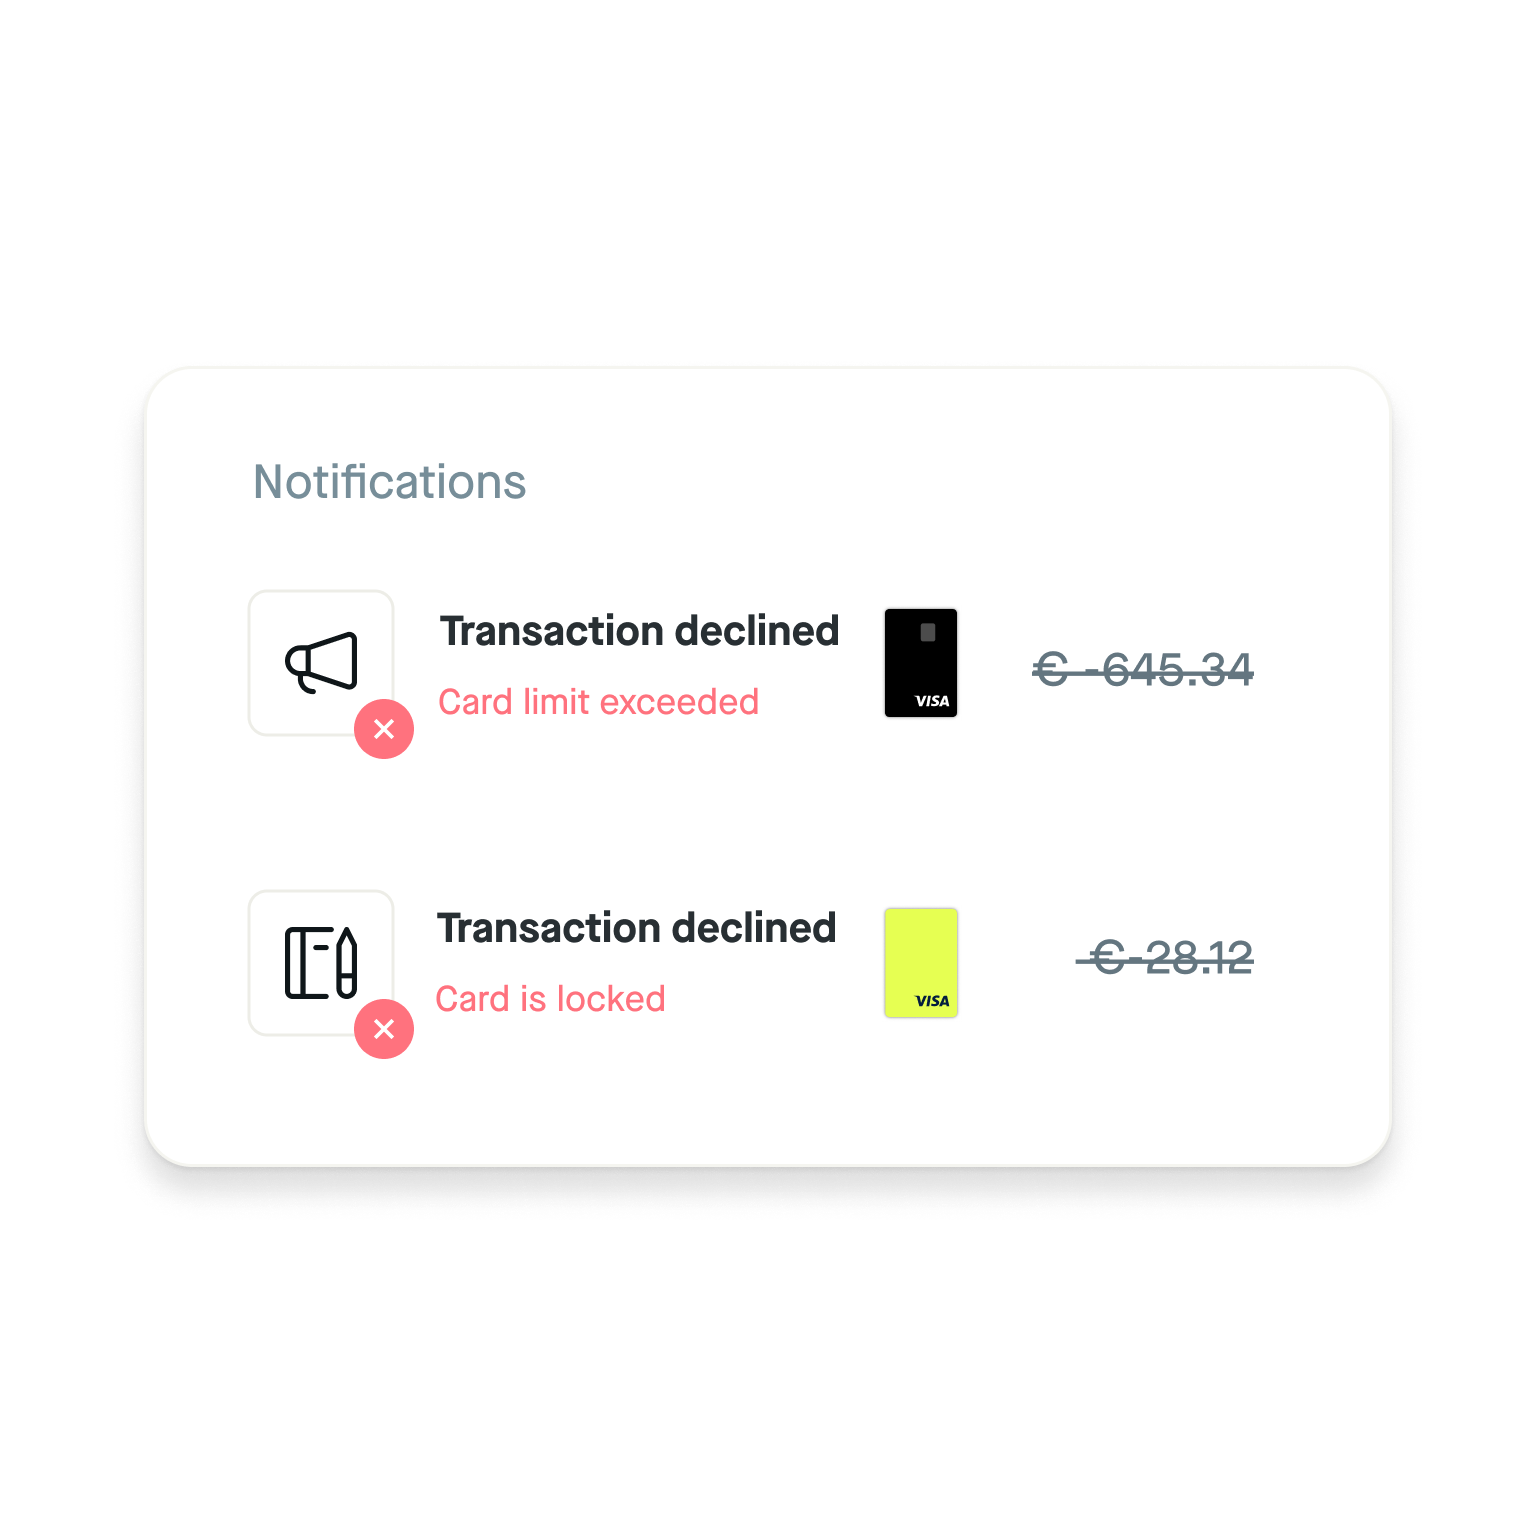 Real-time transaction monitoring tracking